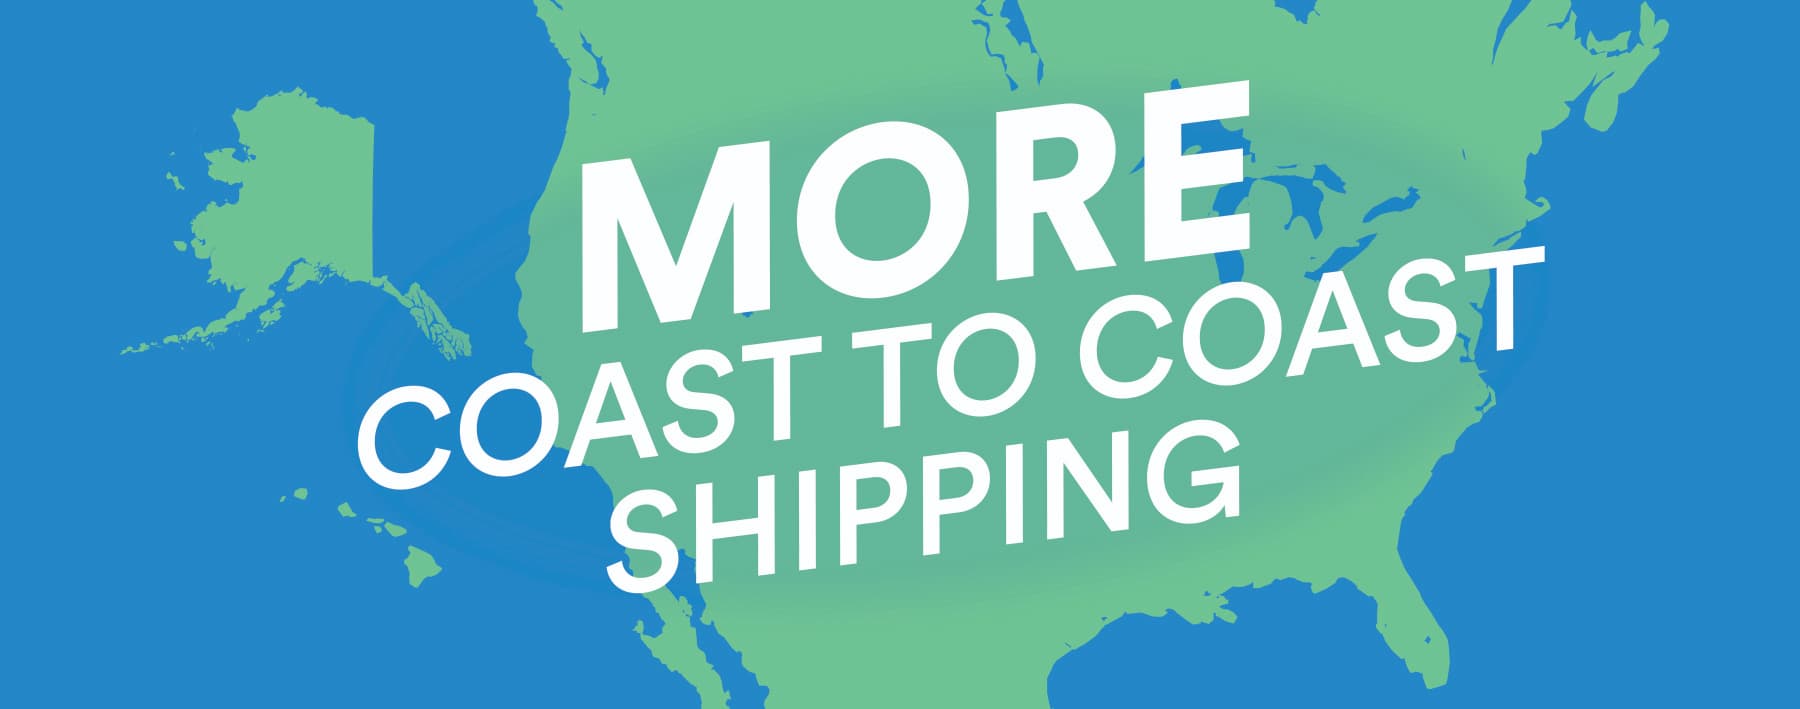 More coast to coast shipping